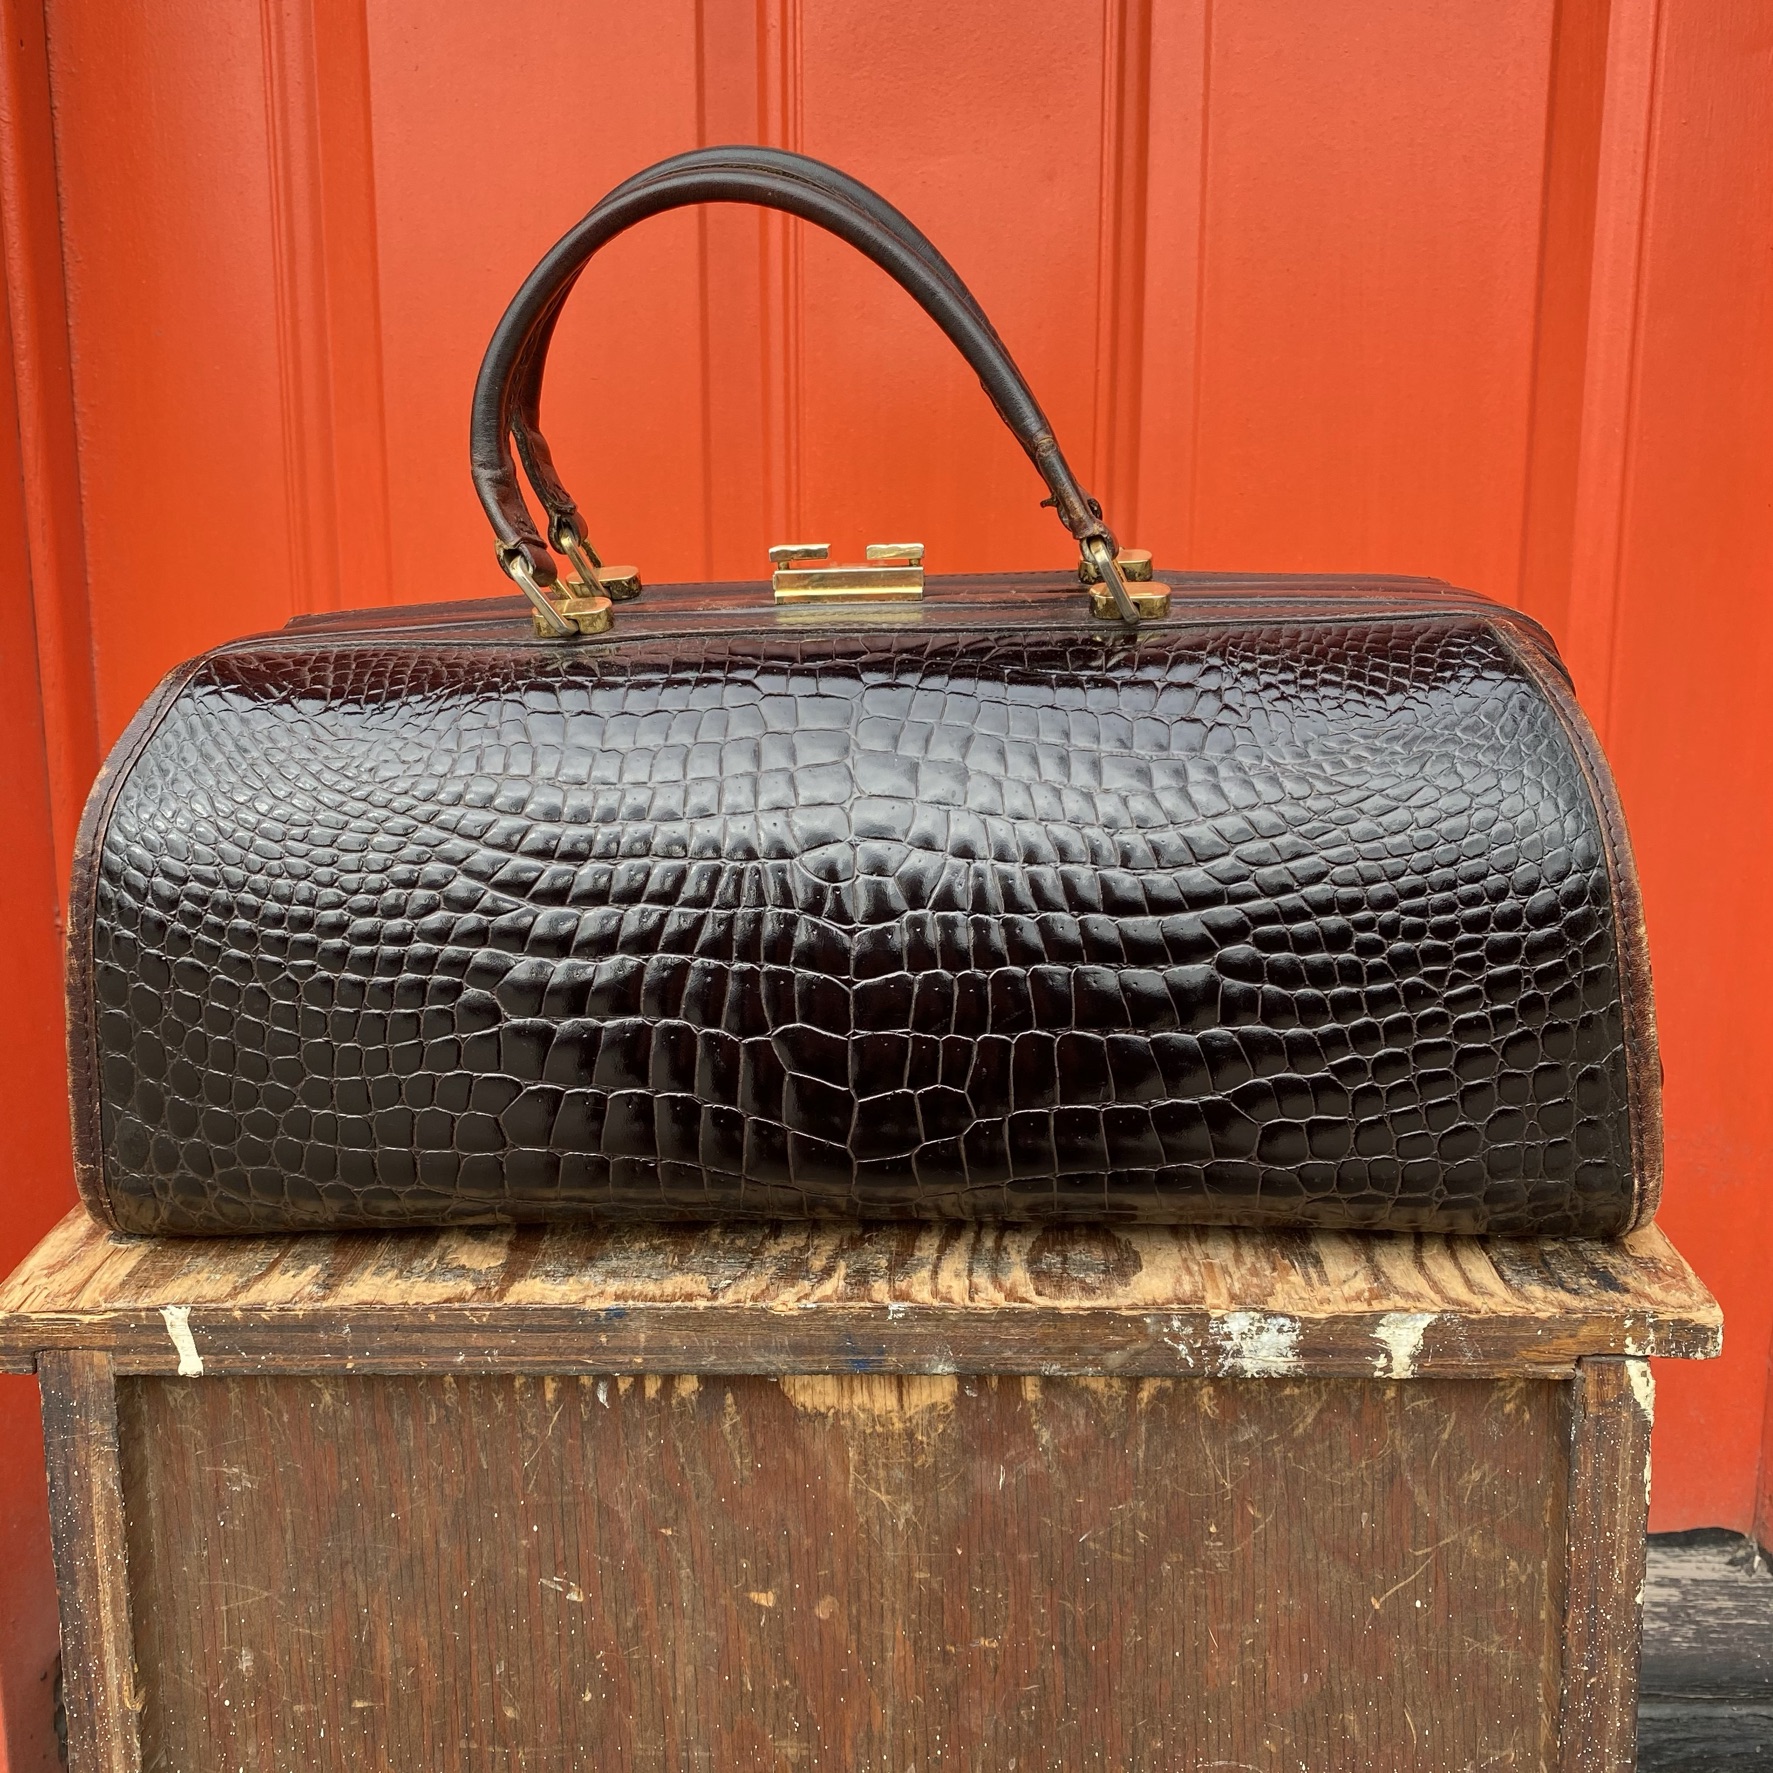 Italian Gladstone style handbag